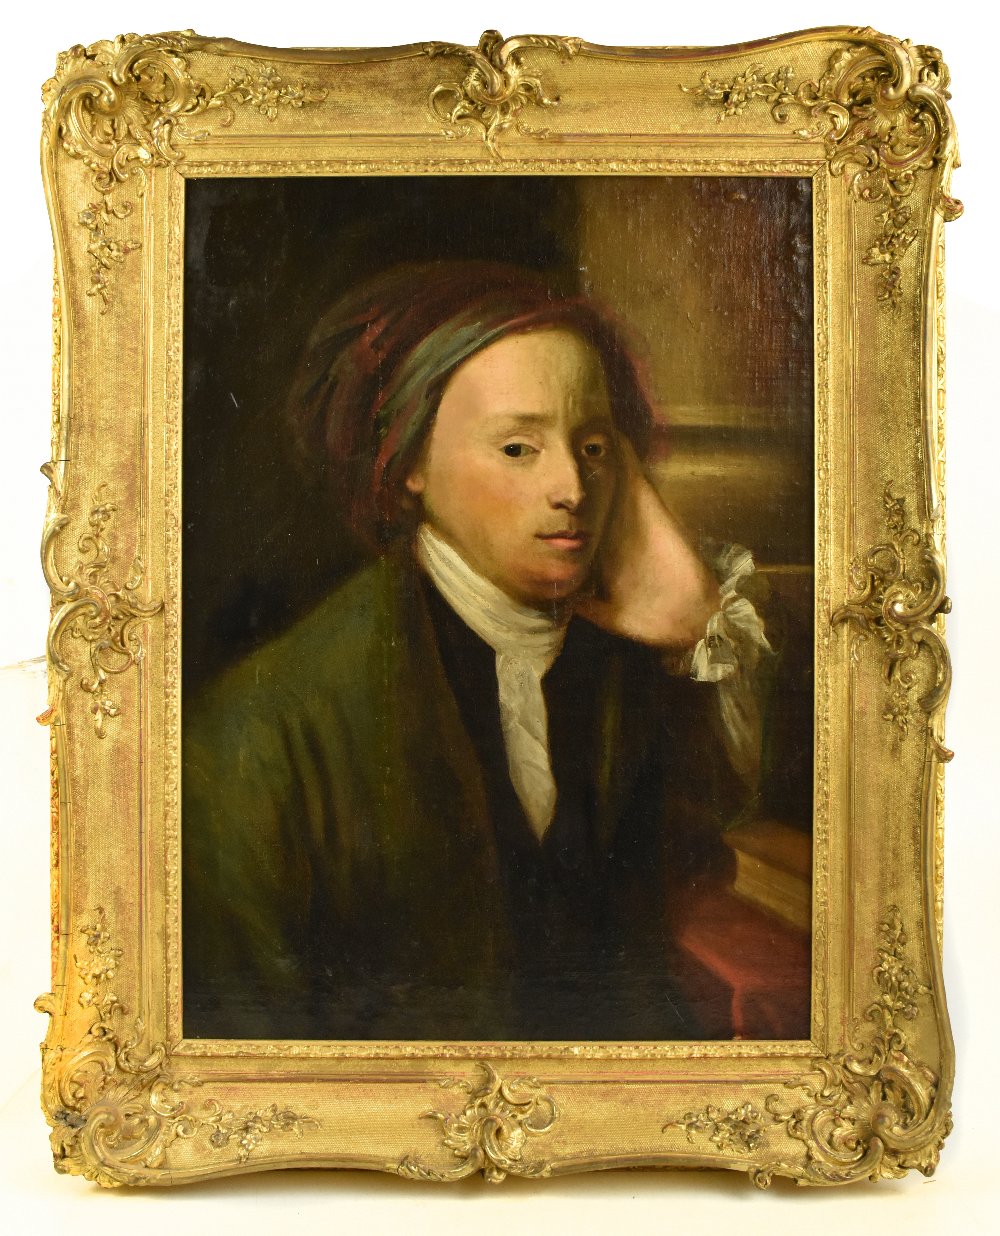 18TH CENTURY ENGLISH SCHOOL; oil on canvas laid on board, portrait study, unsigned, 62 x 45cm,